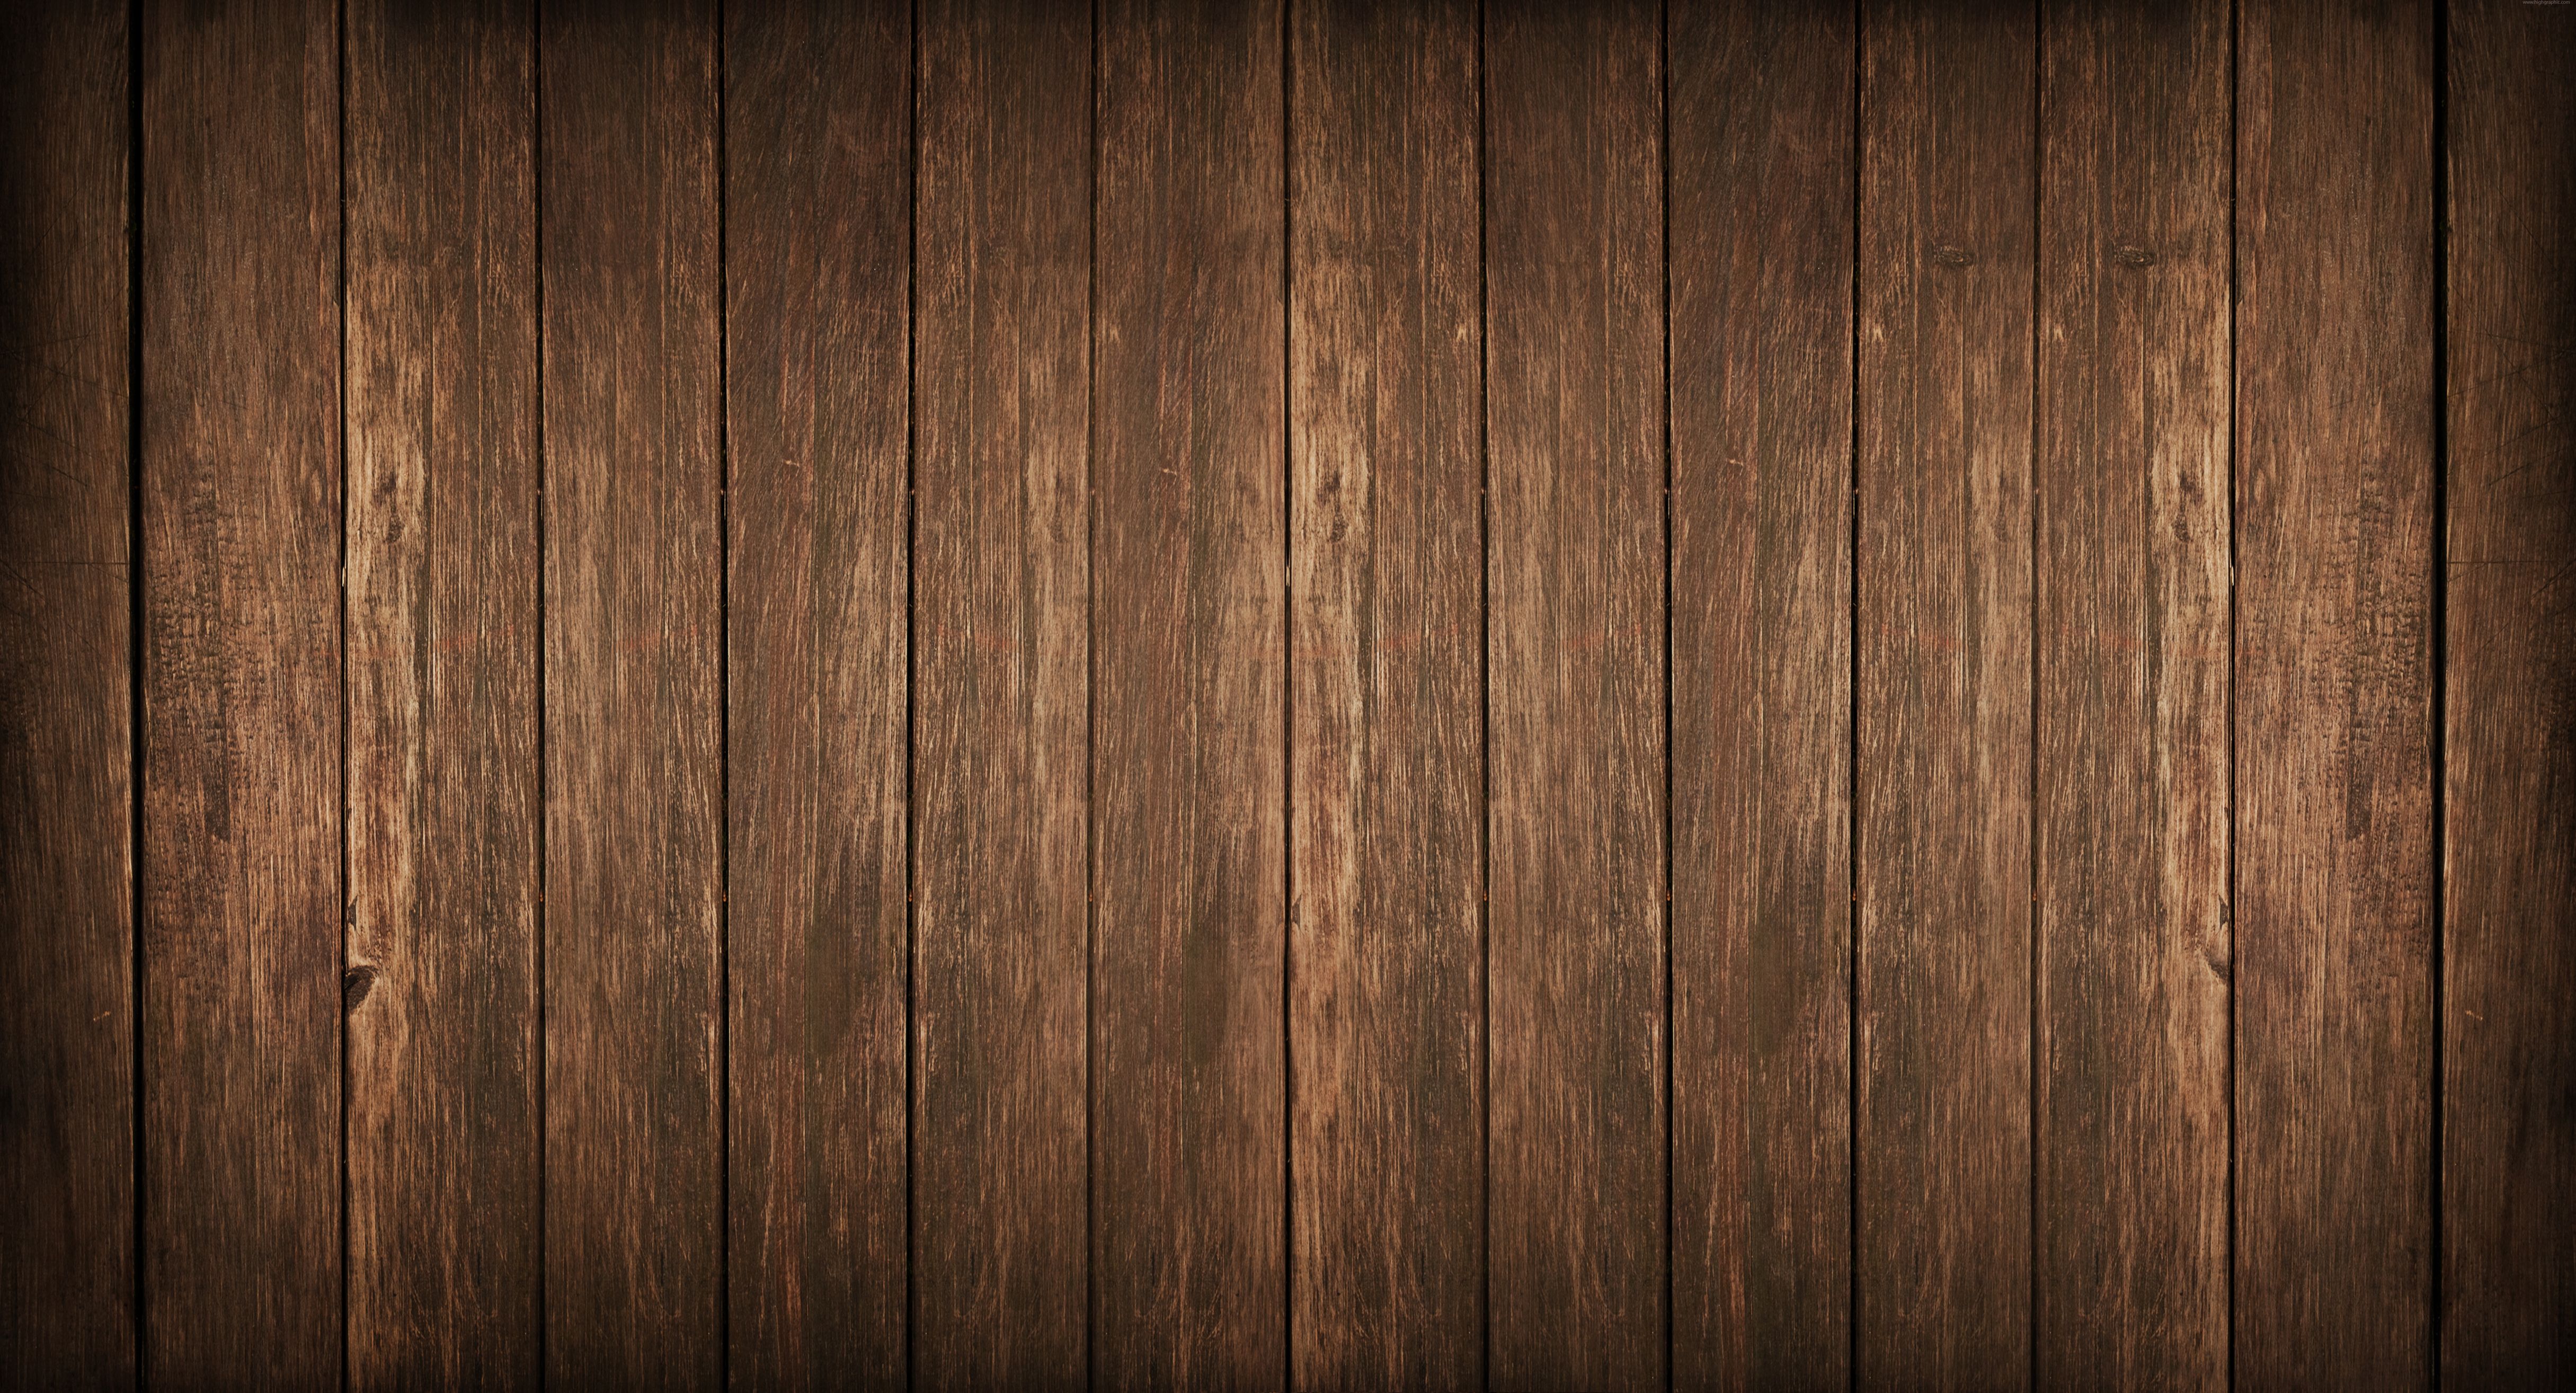 Wood Background Wallpaper | Stuff to Buy | Pinterest | Wood ...